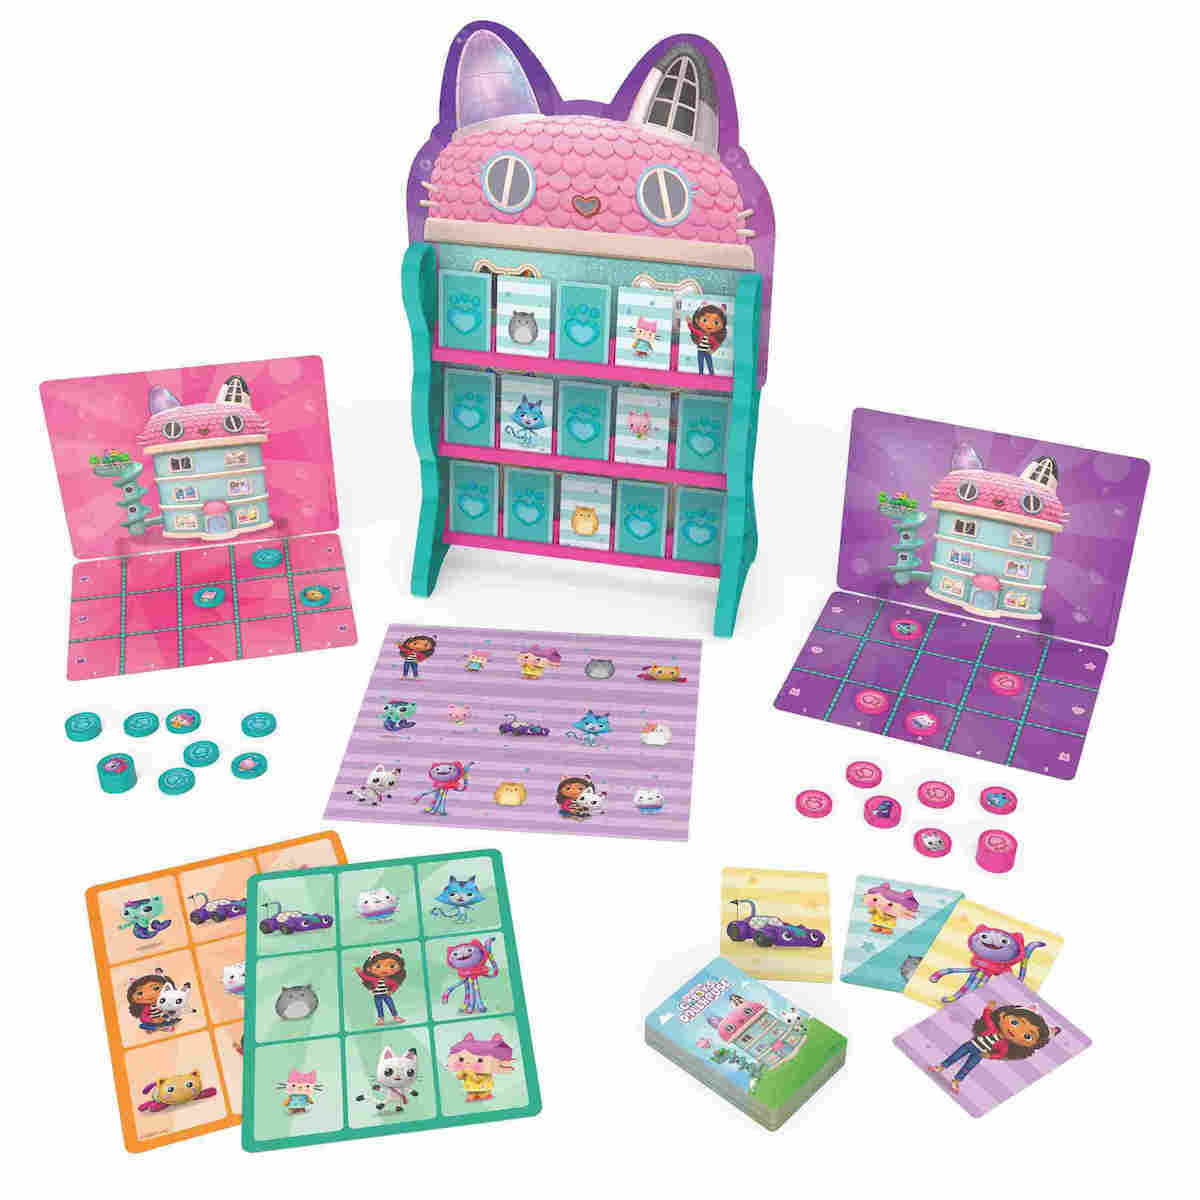 Spin Master Gabby's Dollhouse Επιτραπέζιο 8 Παιχνίδια με την Gabby (6065857)